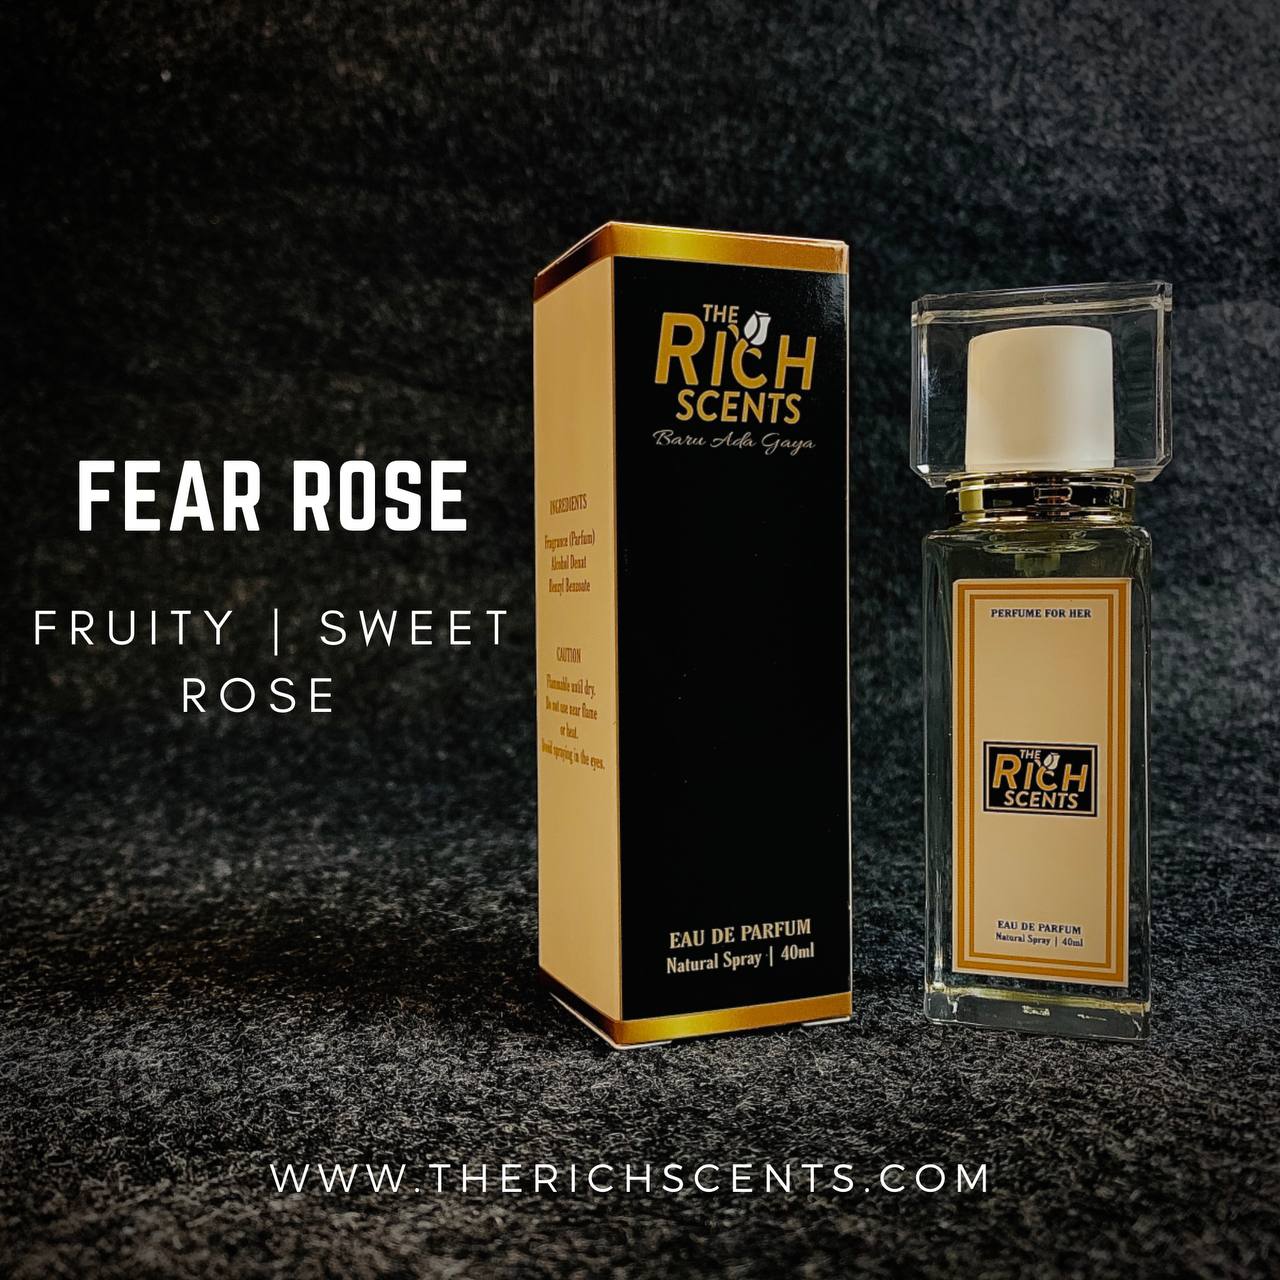 perfume brands malaysia